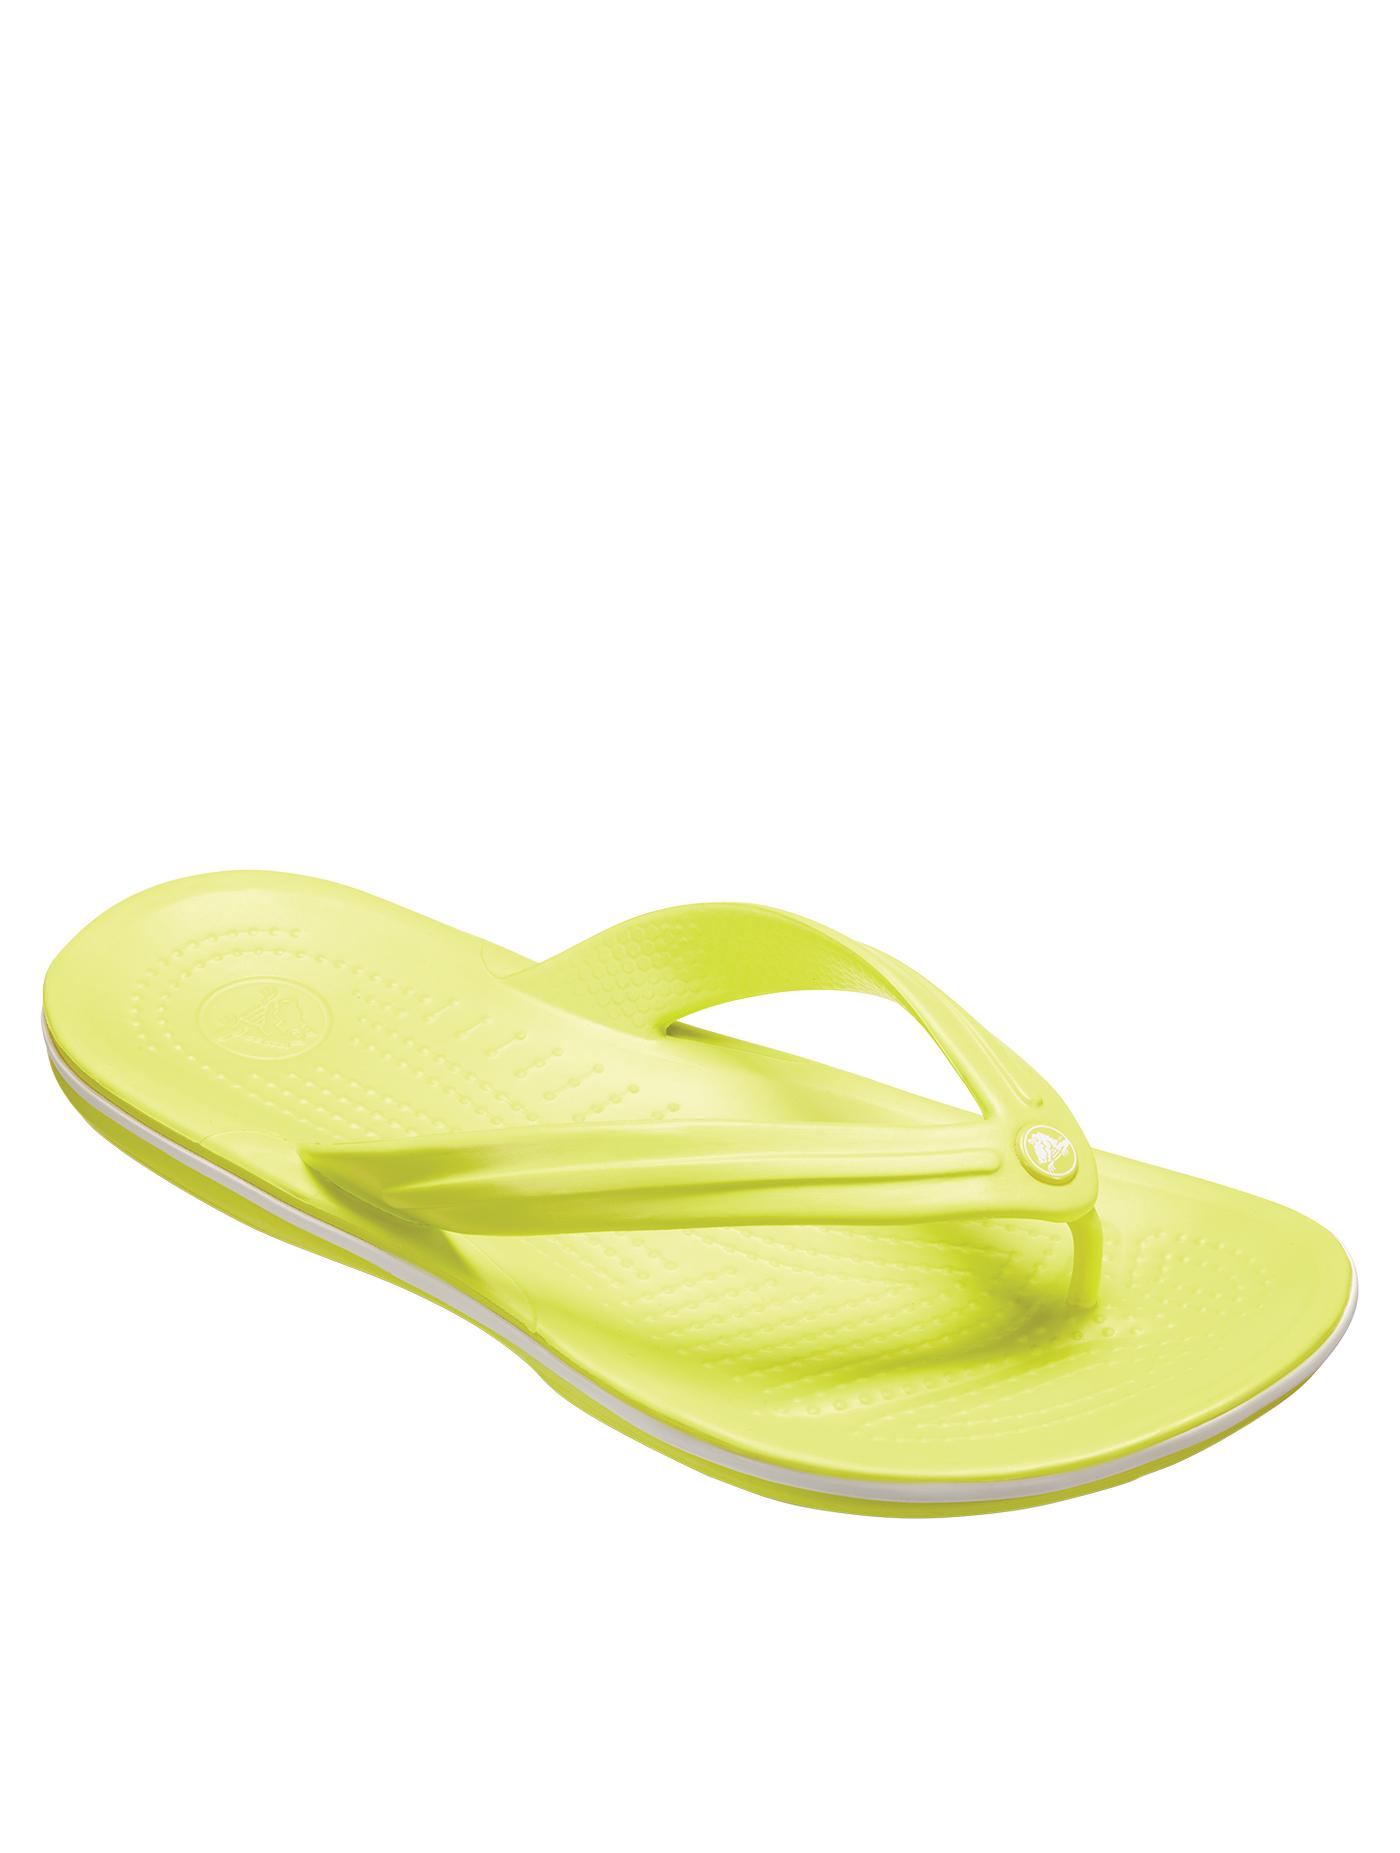 CROCS รองเท้าแตะสำหรับผู้ใหญ่ รุ่น Crocband Flip ไซส์ M7/W9 สี Tennis Ball Green-White